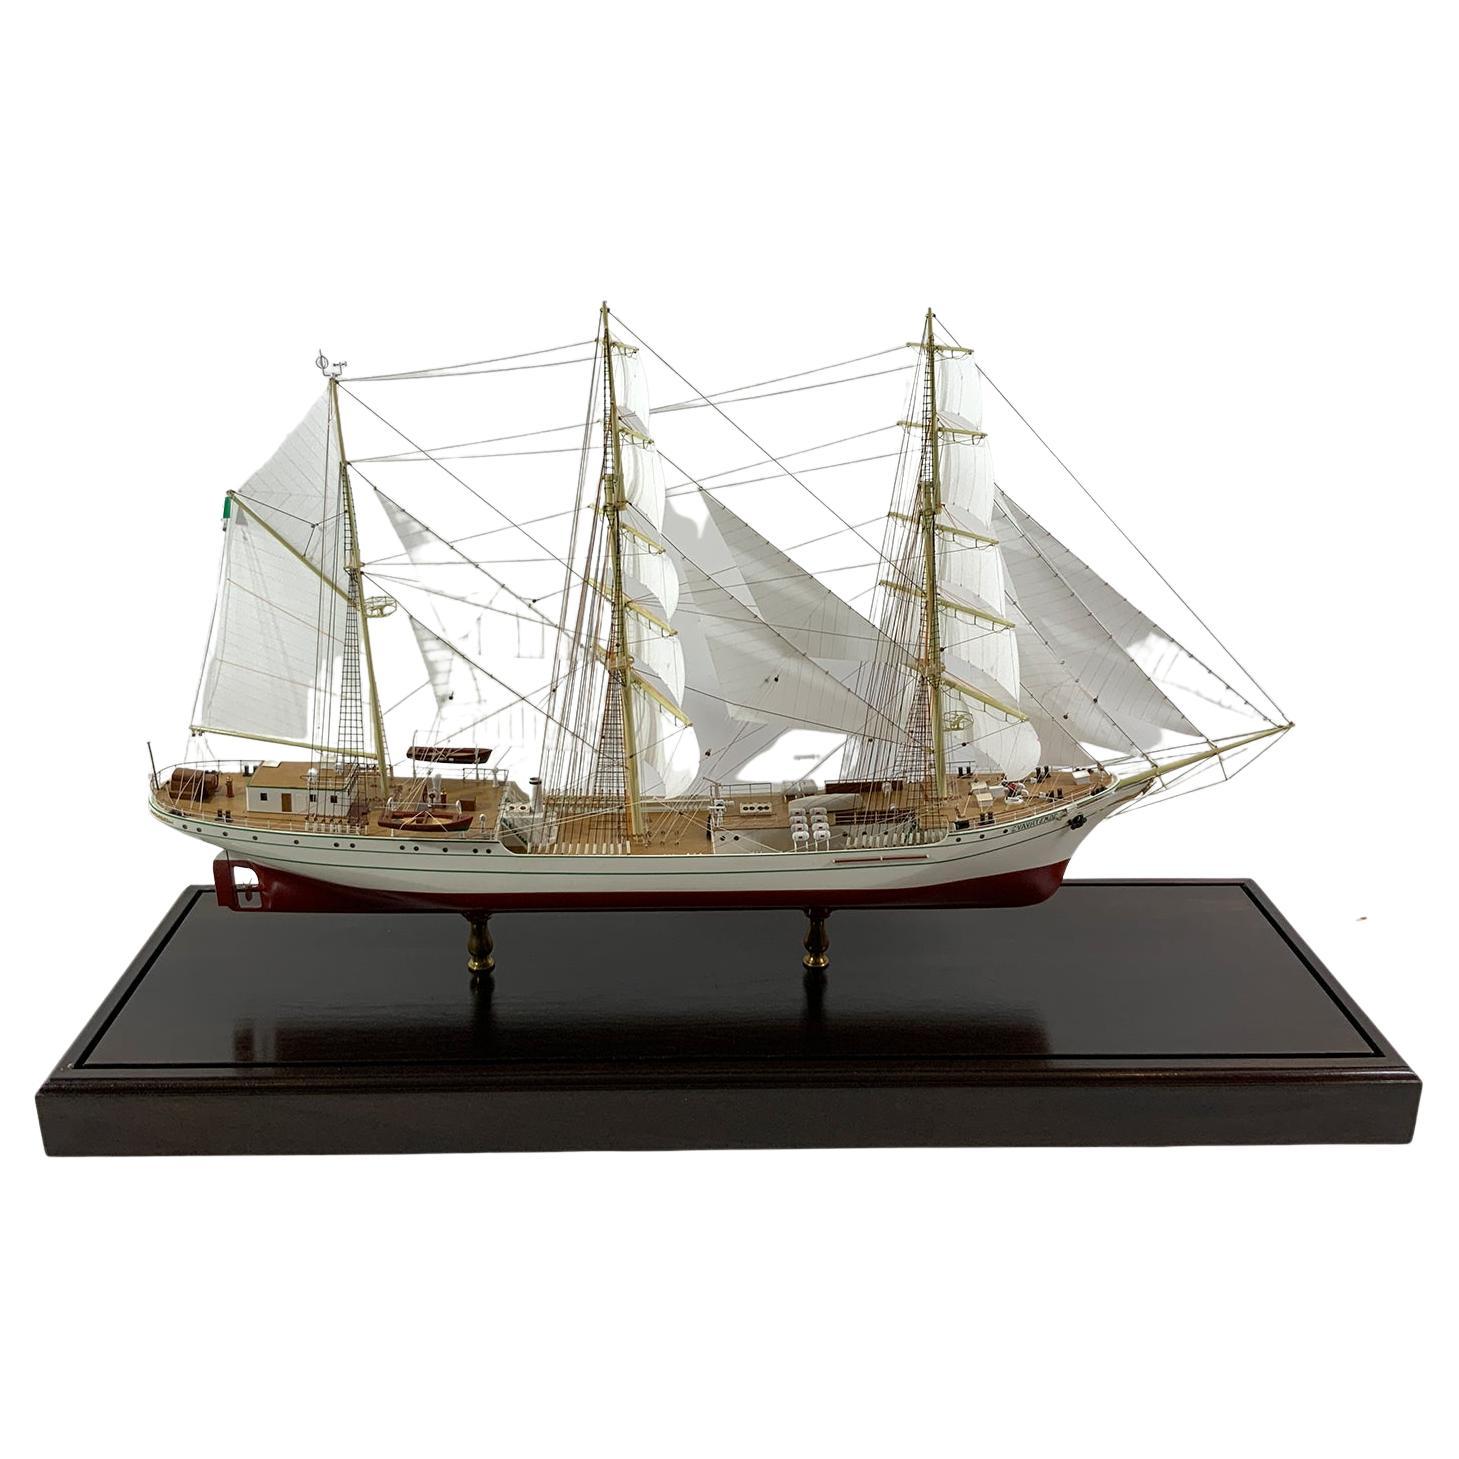 NRP Sagres Sailing Ship Model Kits scale 1:350 